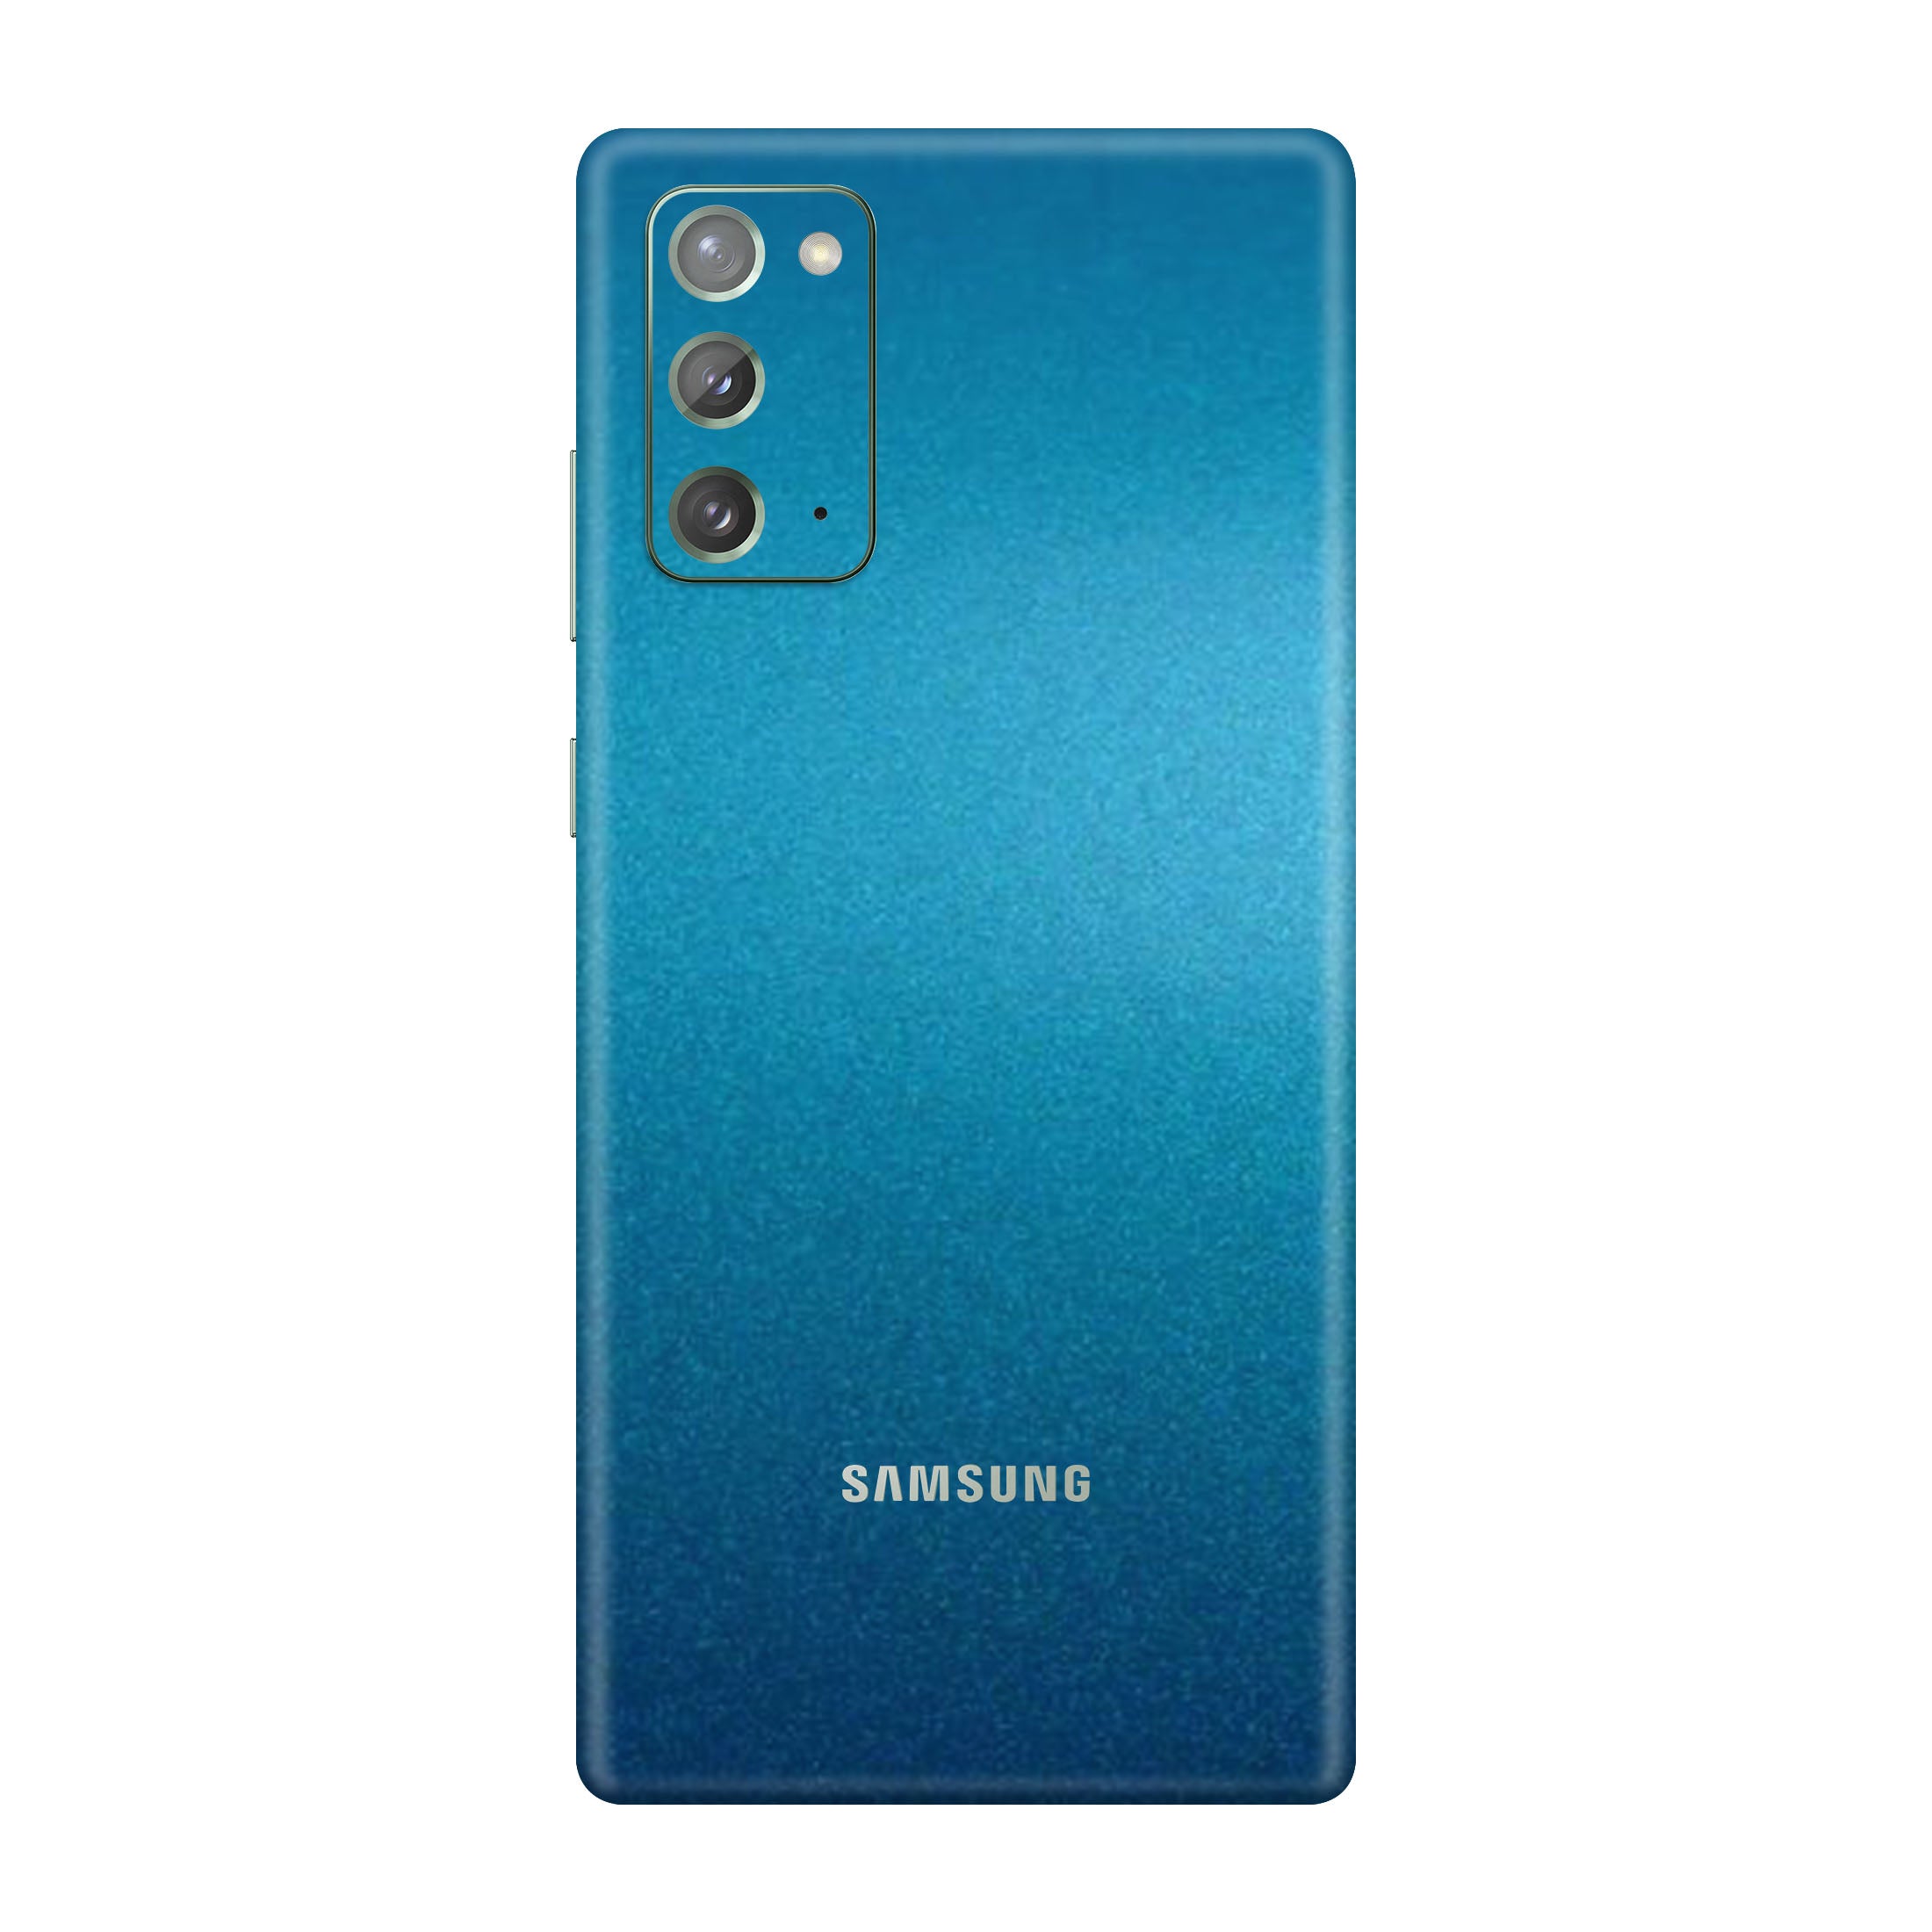 Ocean Blue Skin for Samsung Note 20